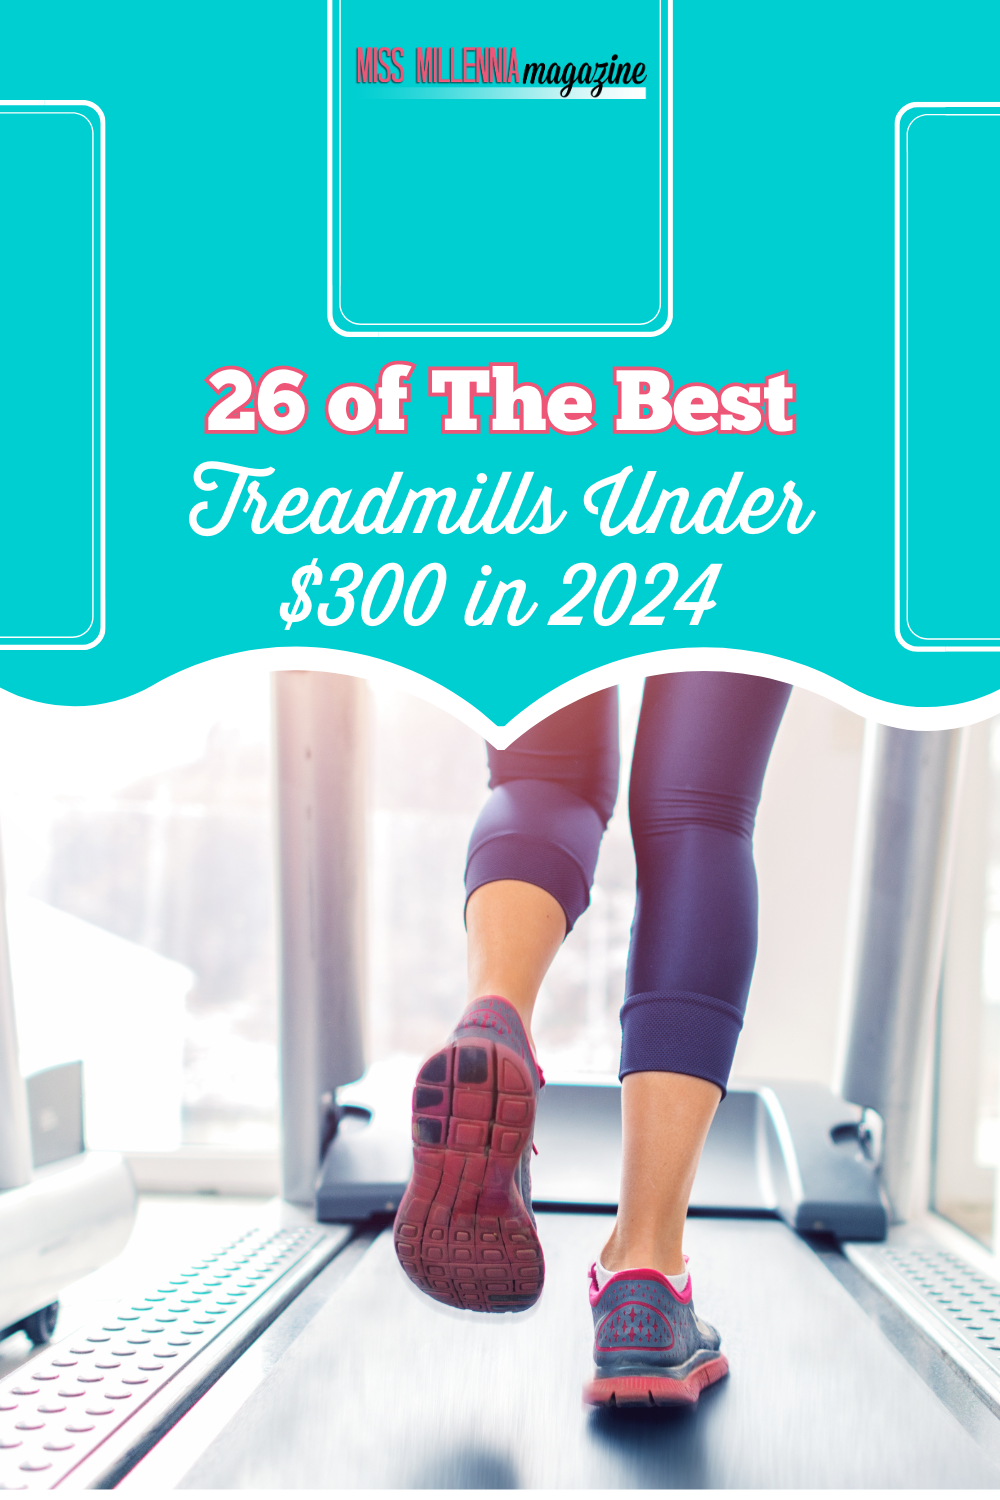 26 of The Best Treadmills Under $300 in 2024